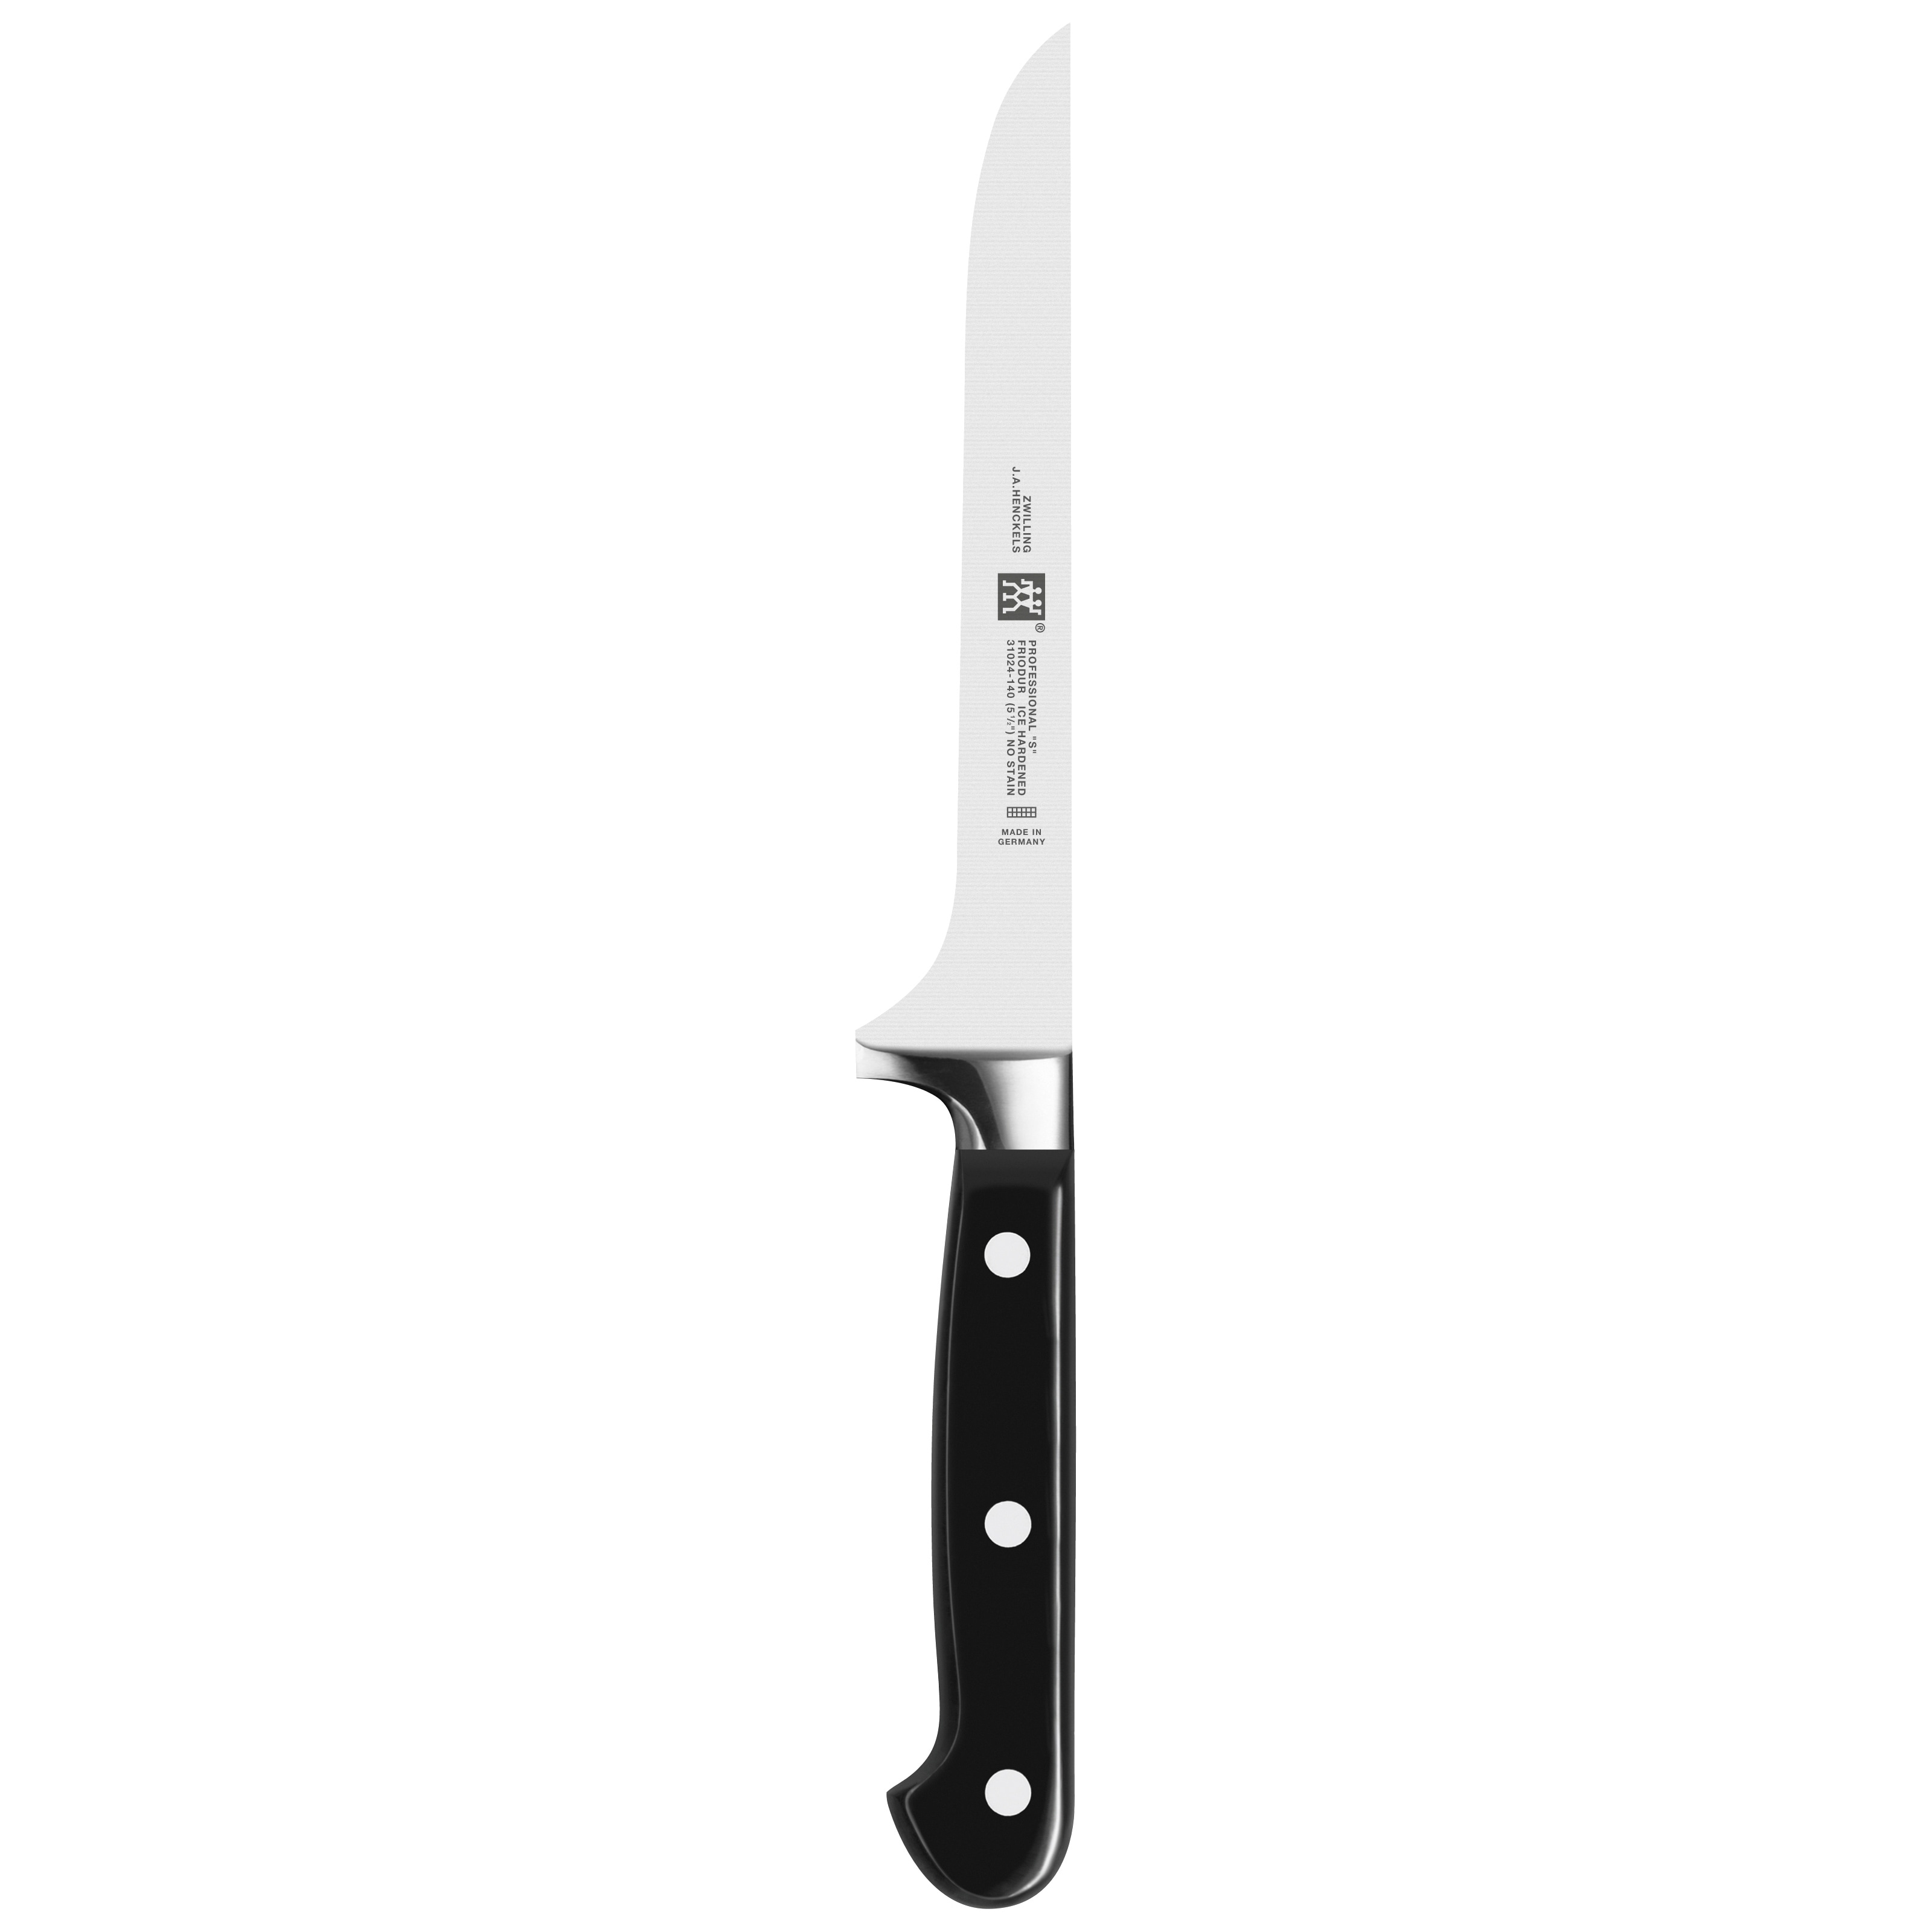  Cuisinart Elite Series German Stainless Steel 5 Knife Set  (2022): Home & Kitchen